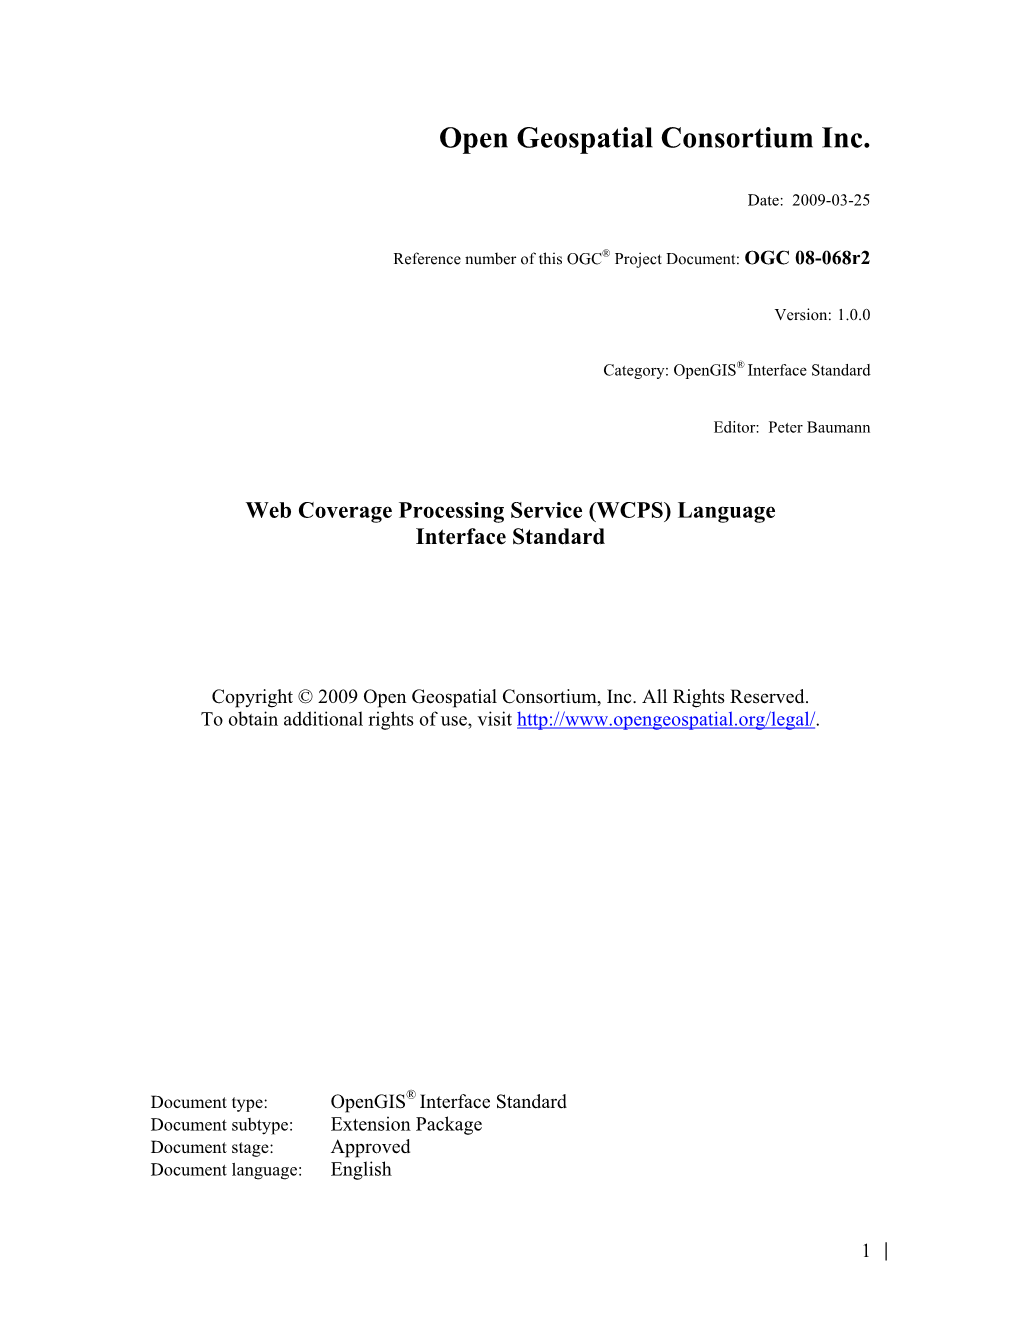 OGC Web Coverage Processing Service (WCPS)